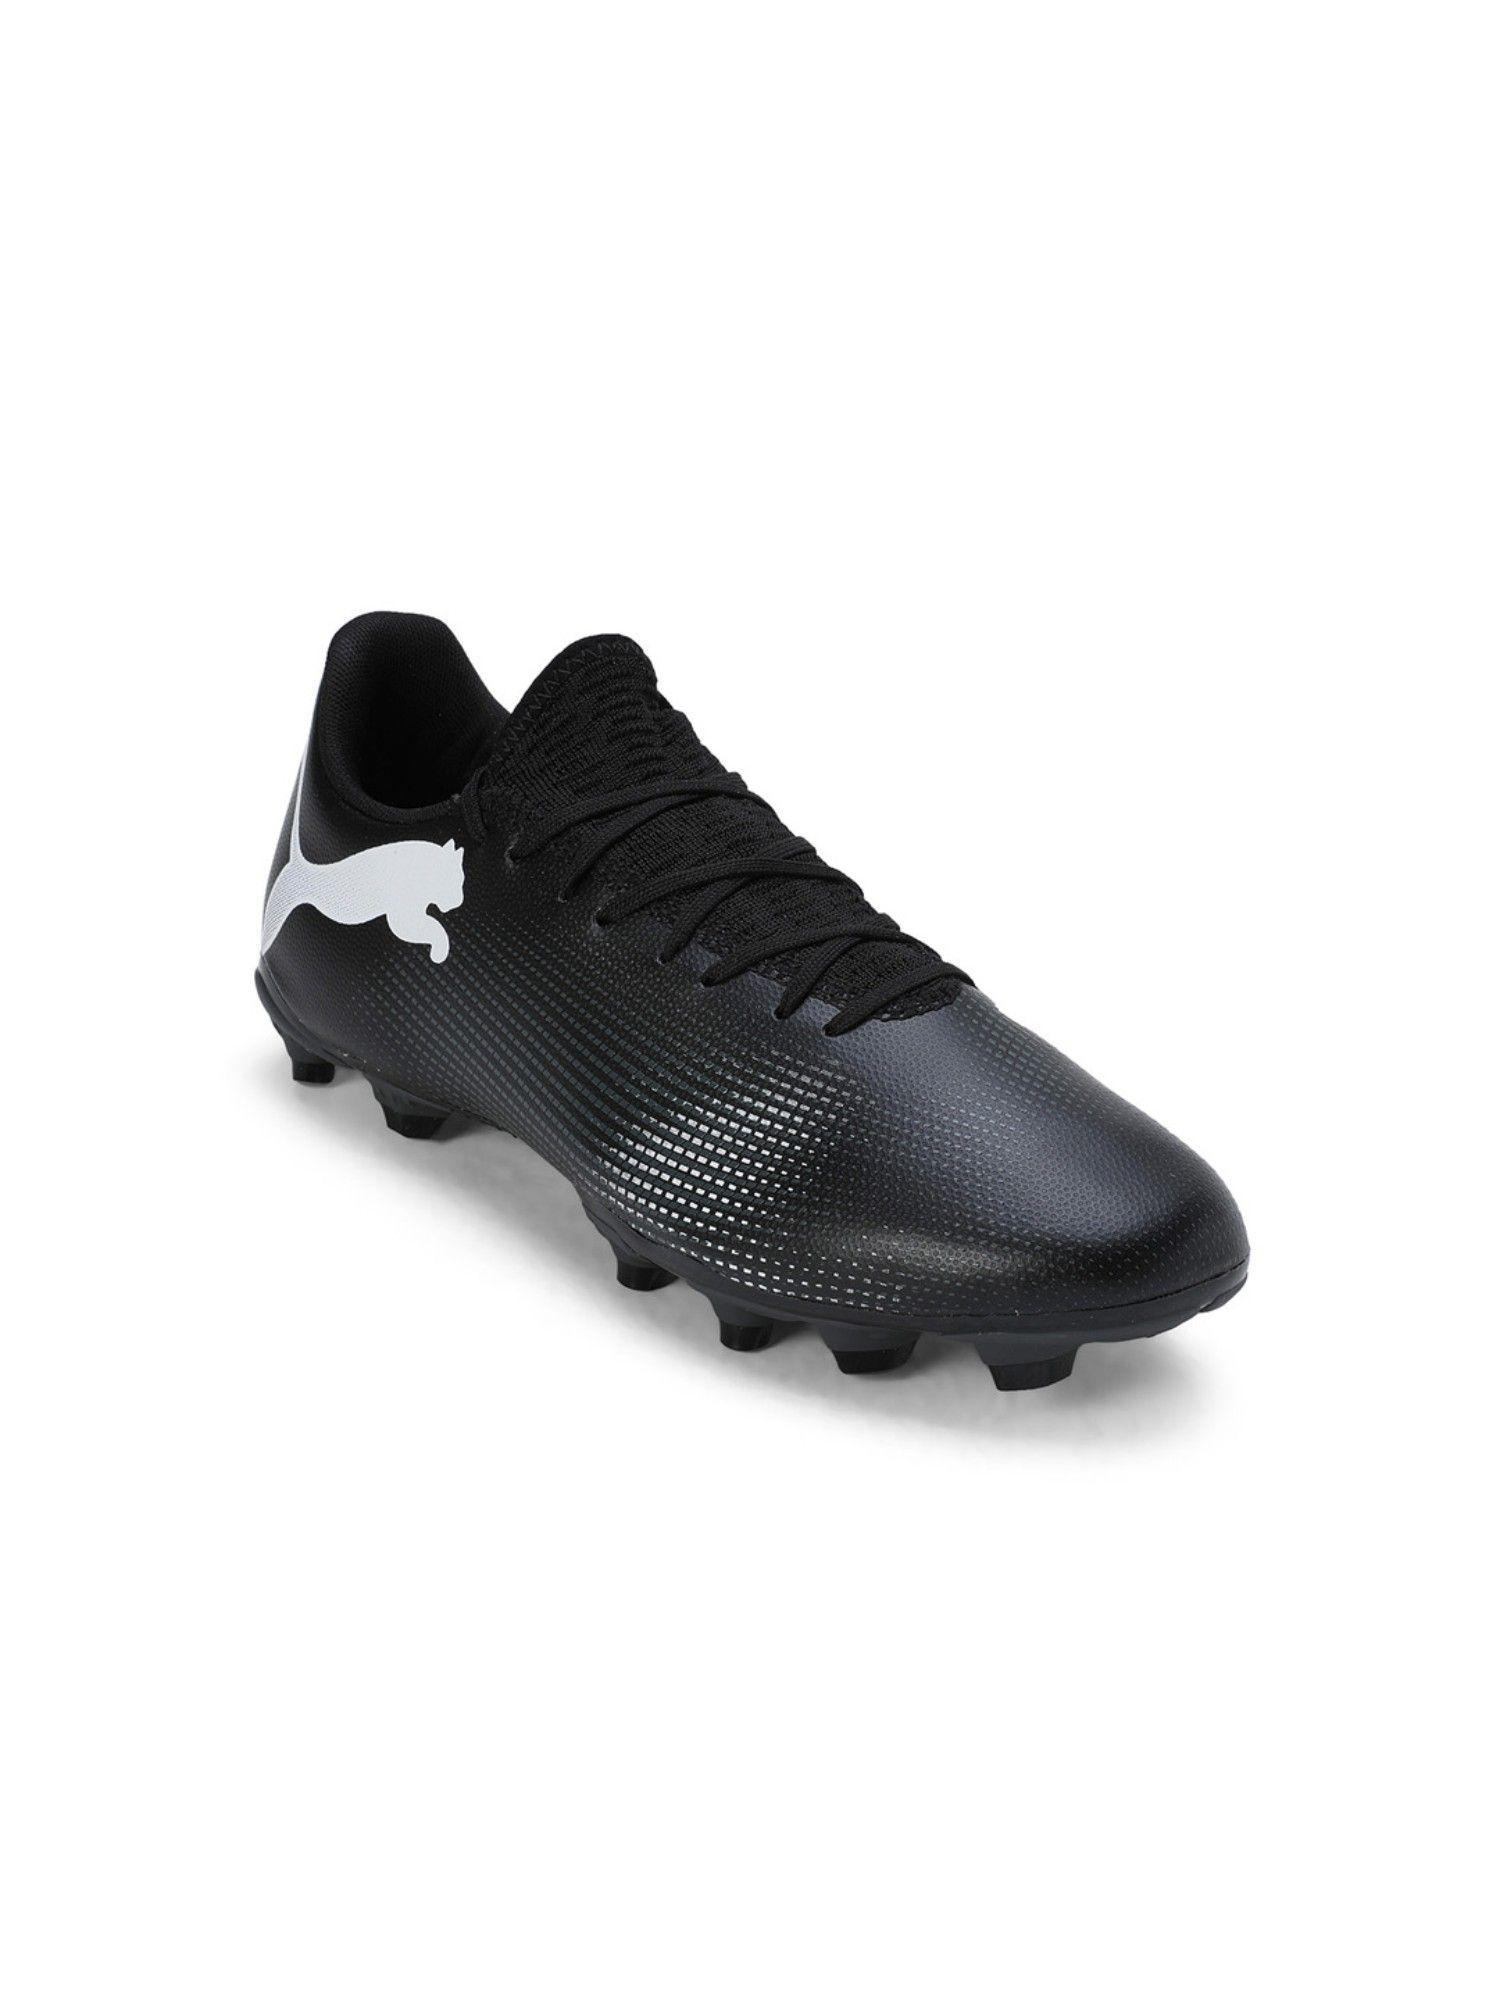 FUTURE 7 PLAY FG-AG Men Black Football Shoes